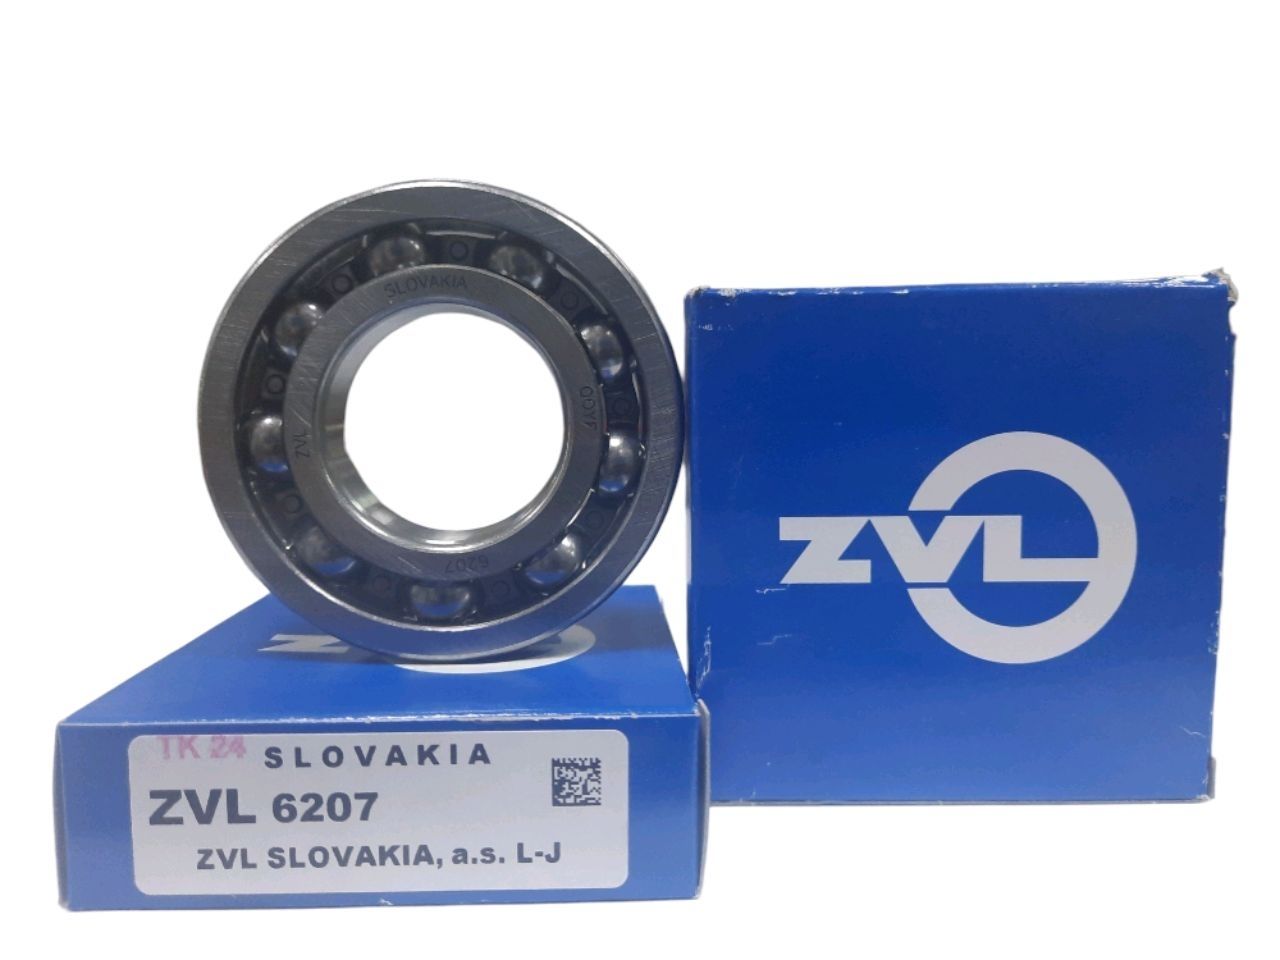 Rulment 207 ZVL (Slovacia)